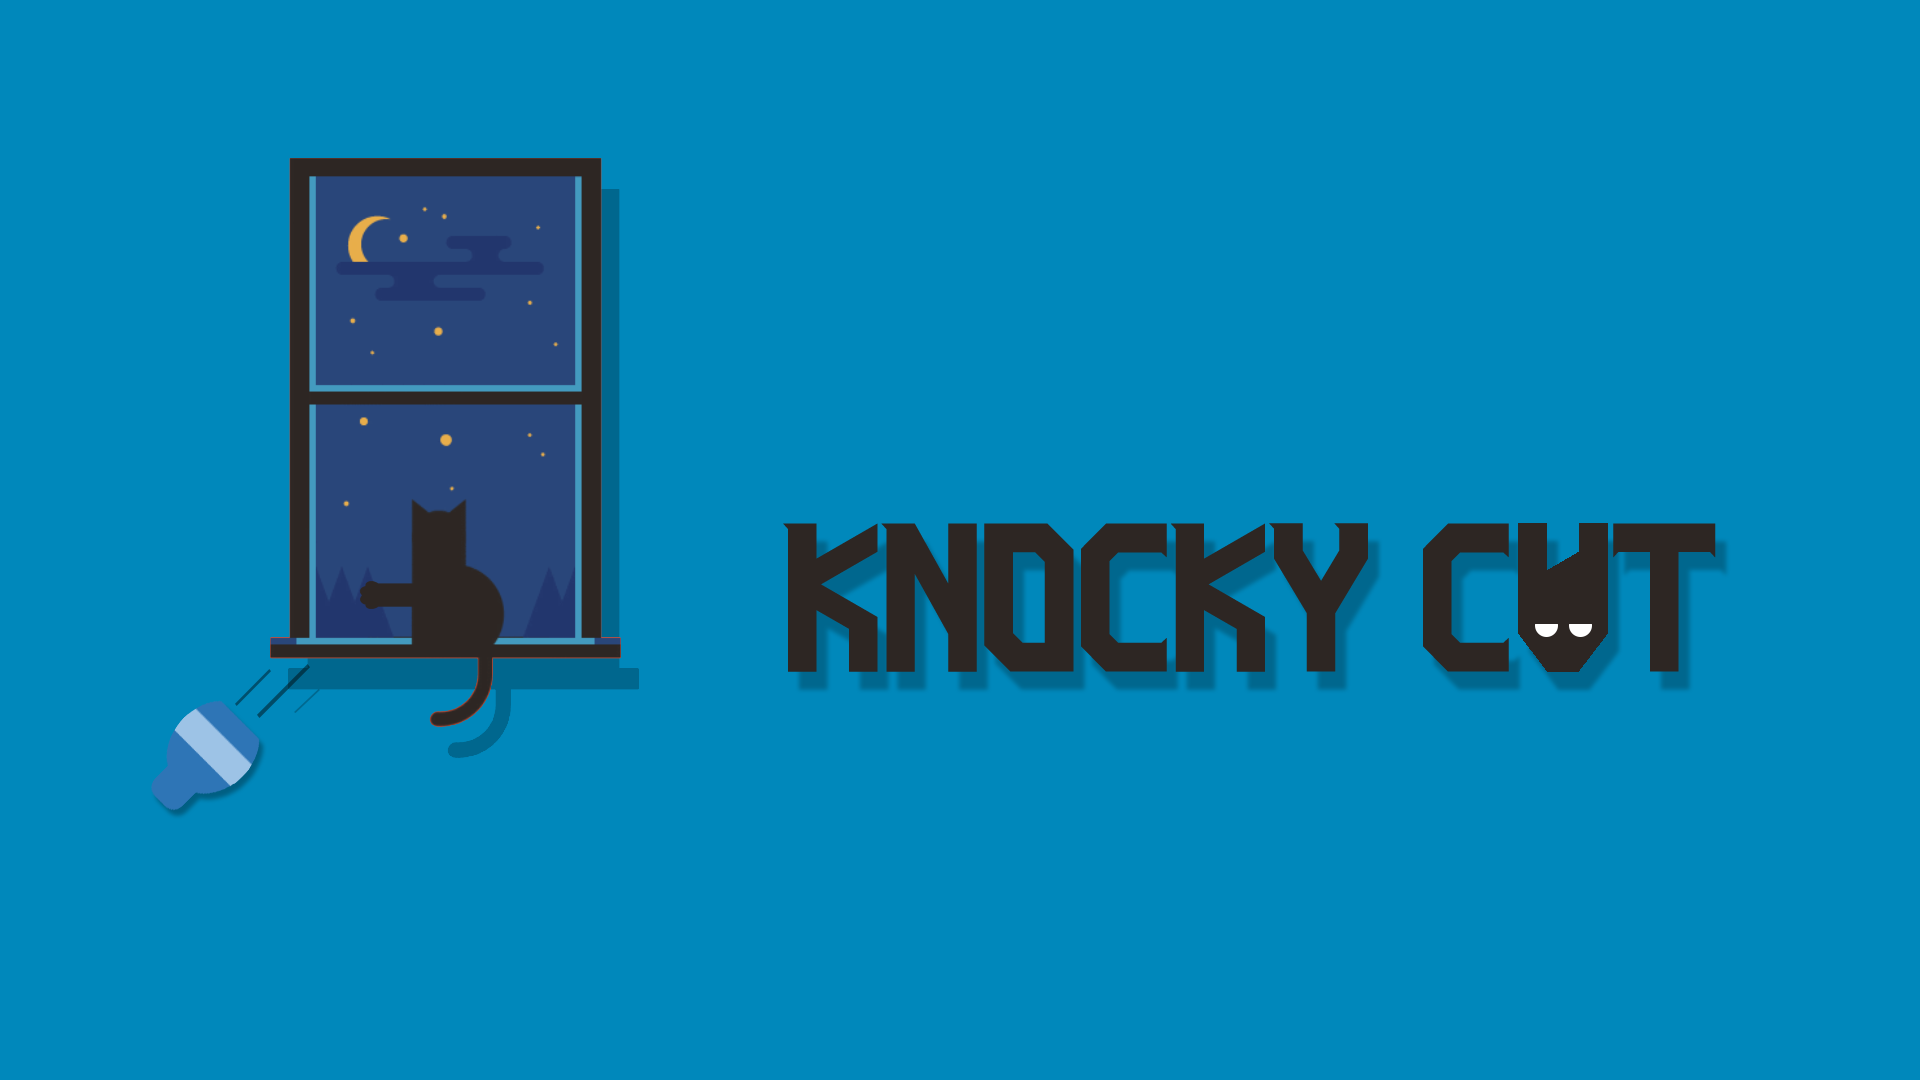 Knocky Cat